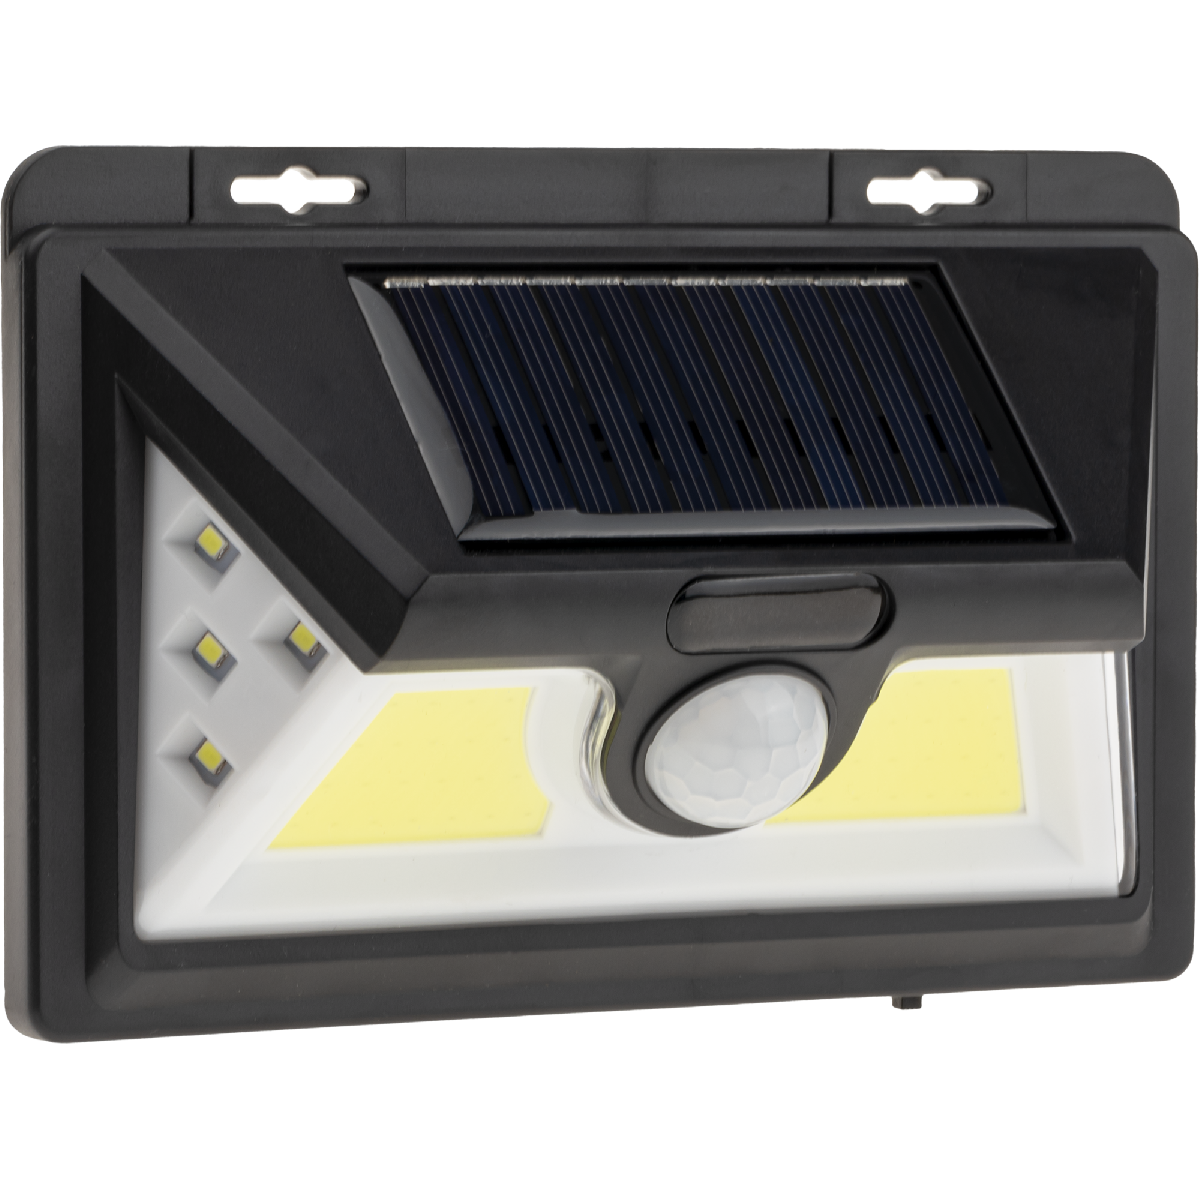 Прожектор на солнечных батареях Duwi Solar led 25016 6